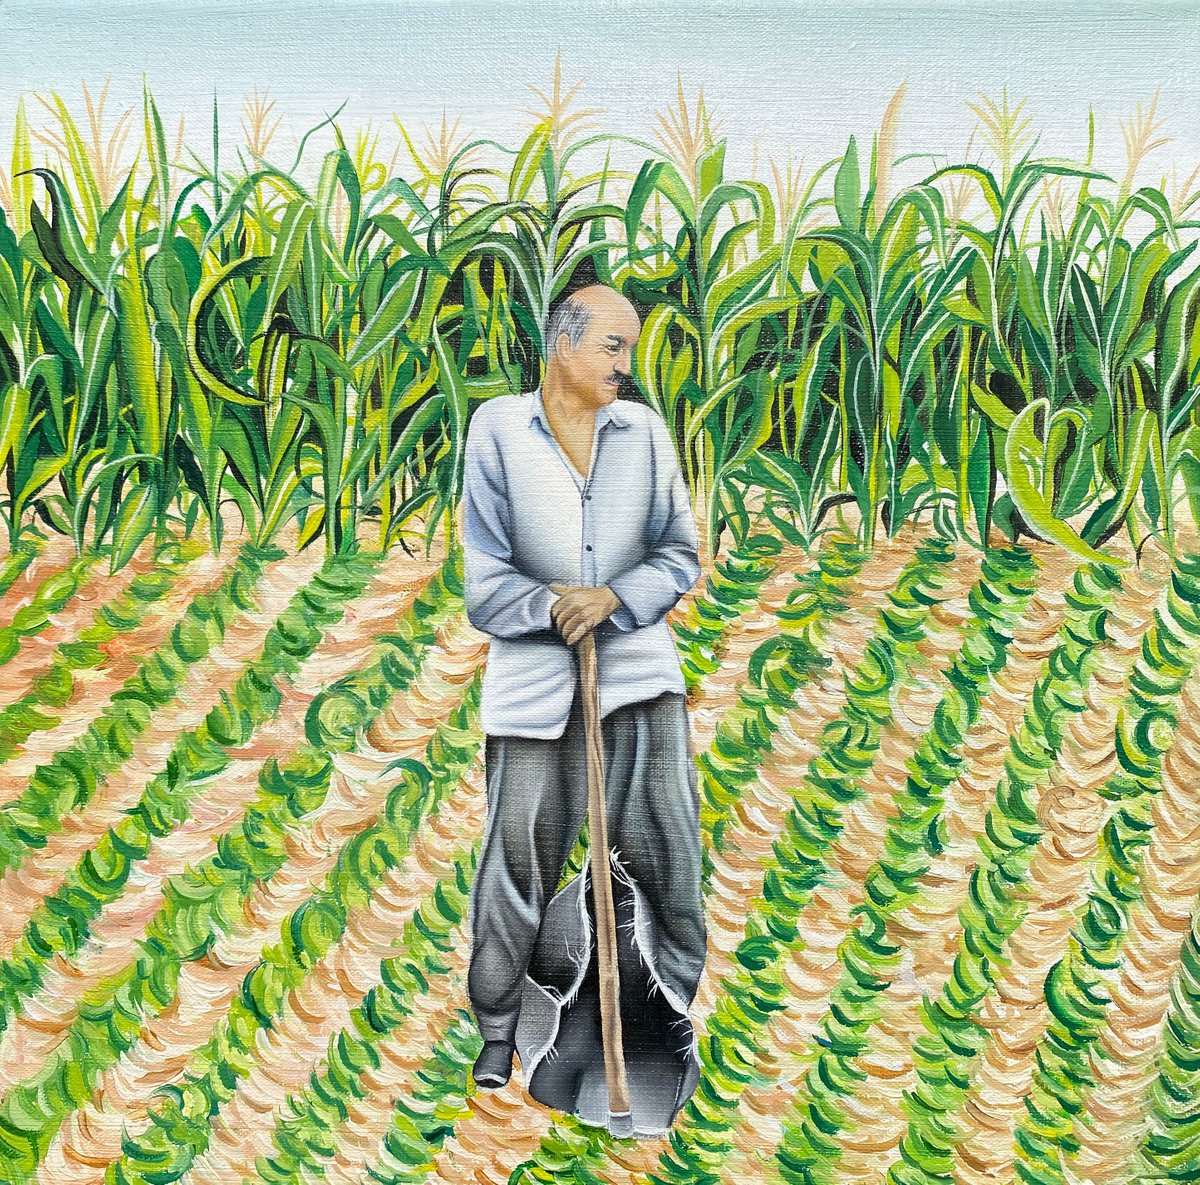 Cornfields by Miret Habib